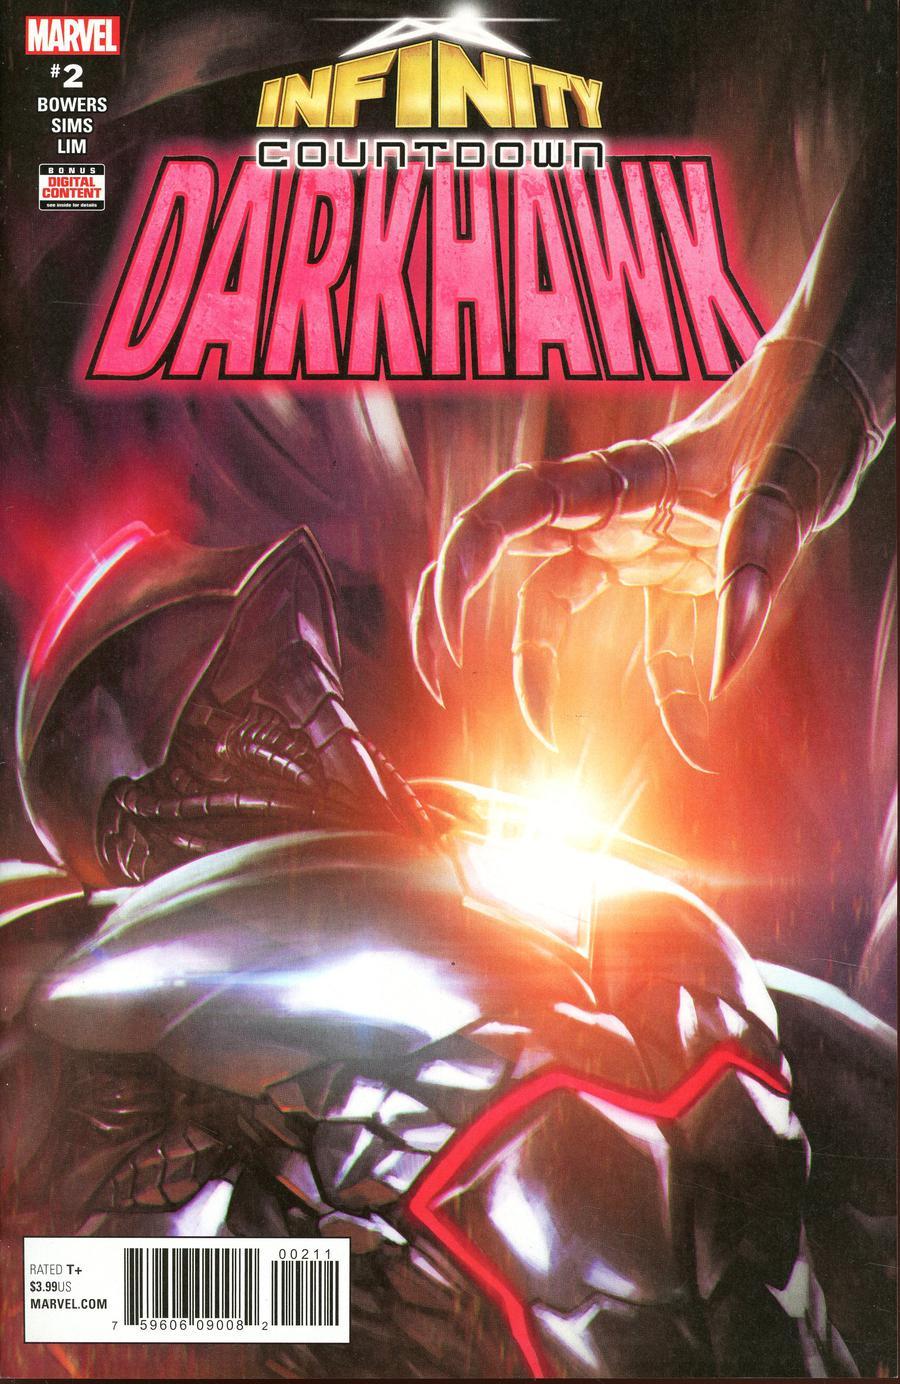 Infinity Countdown Darkhawk Vol. 1 #2